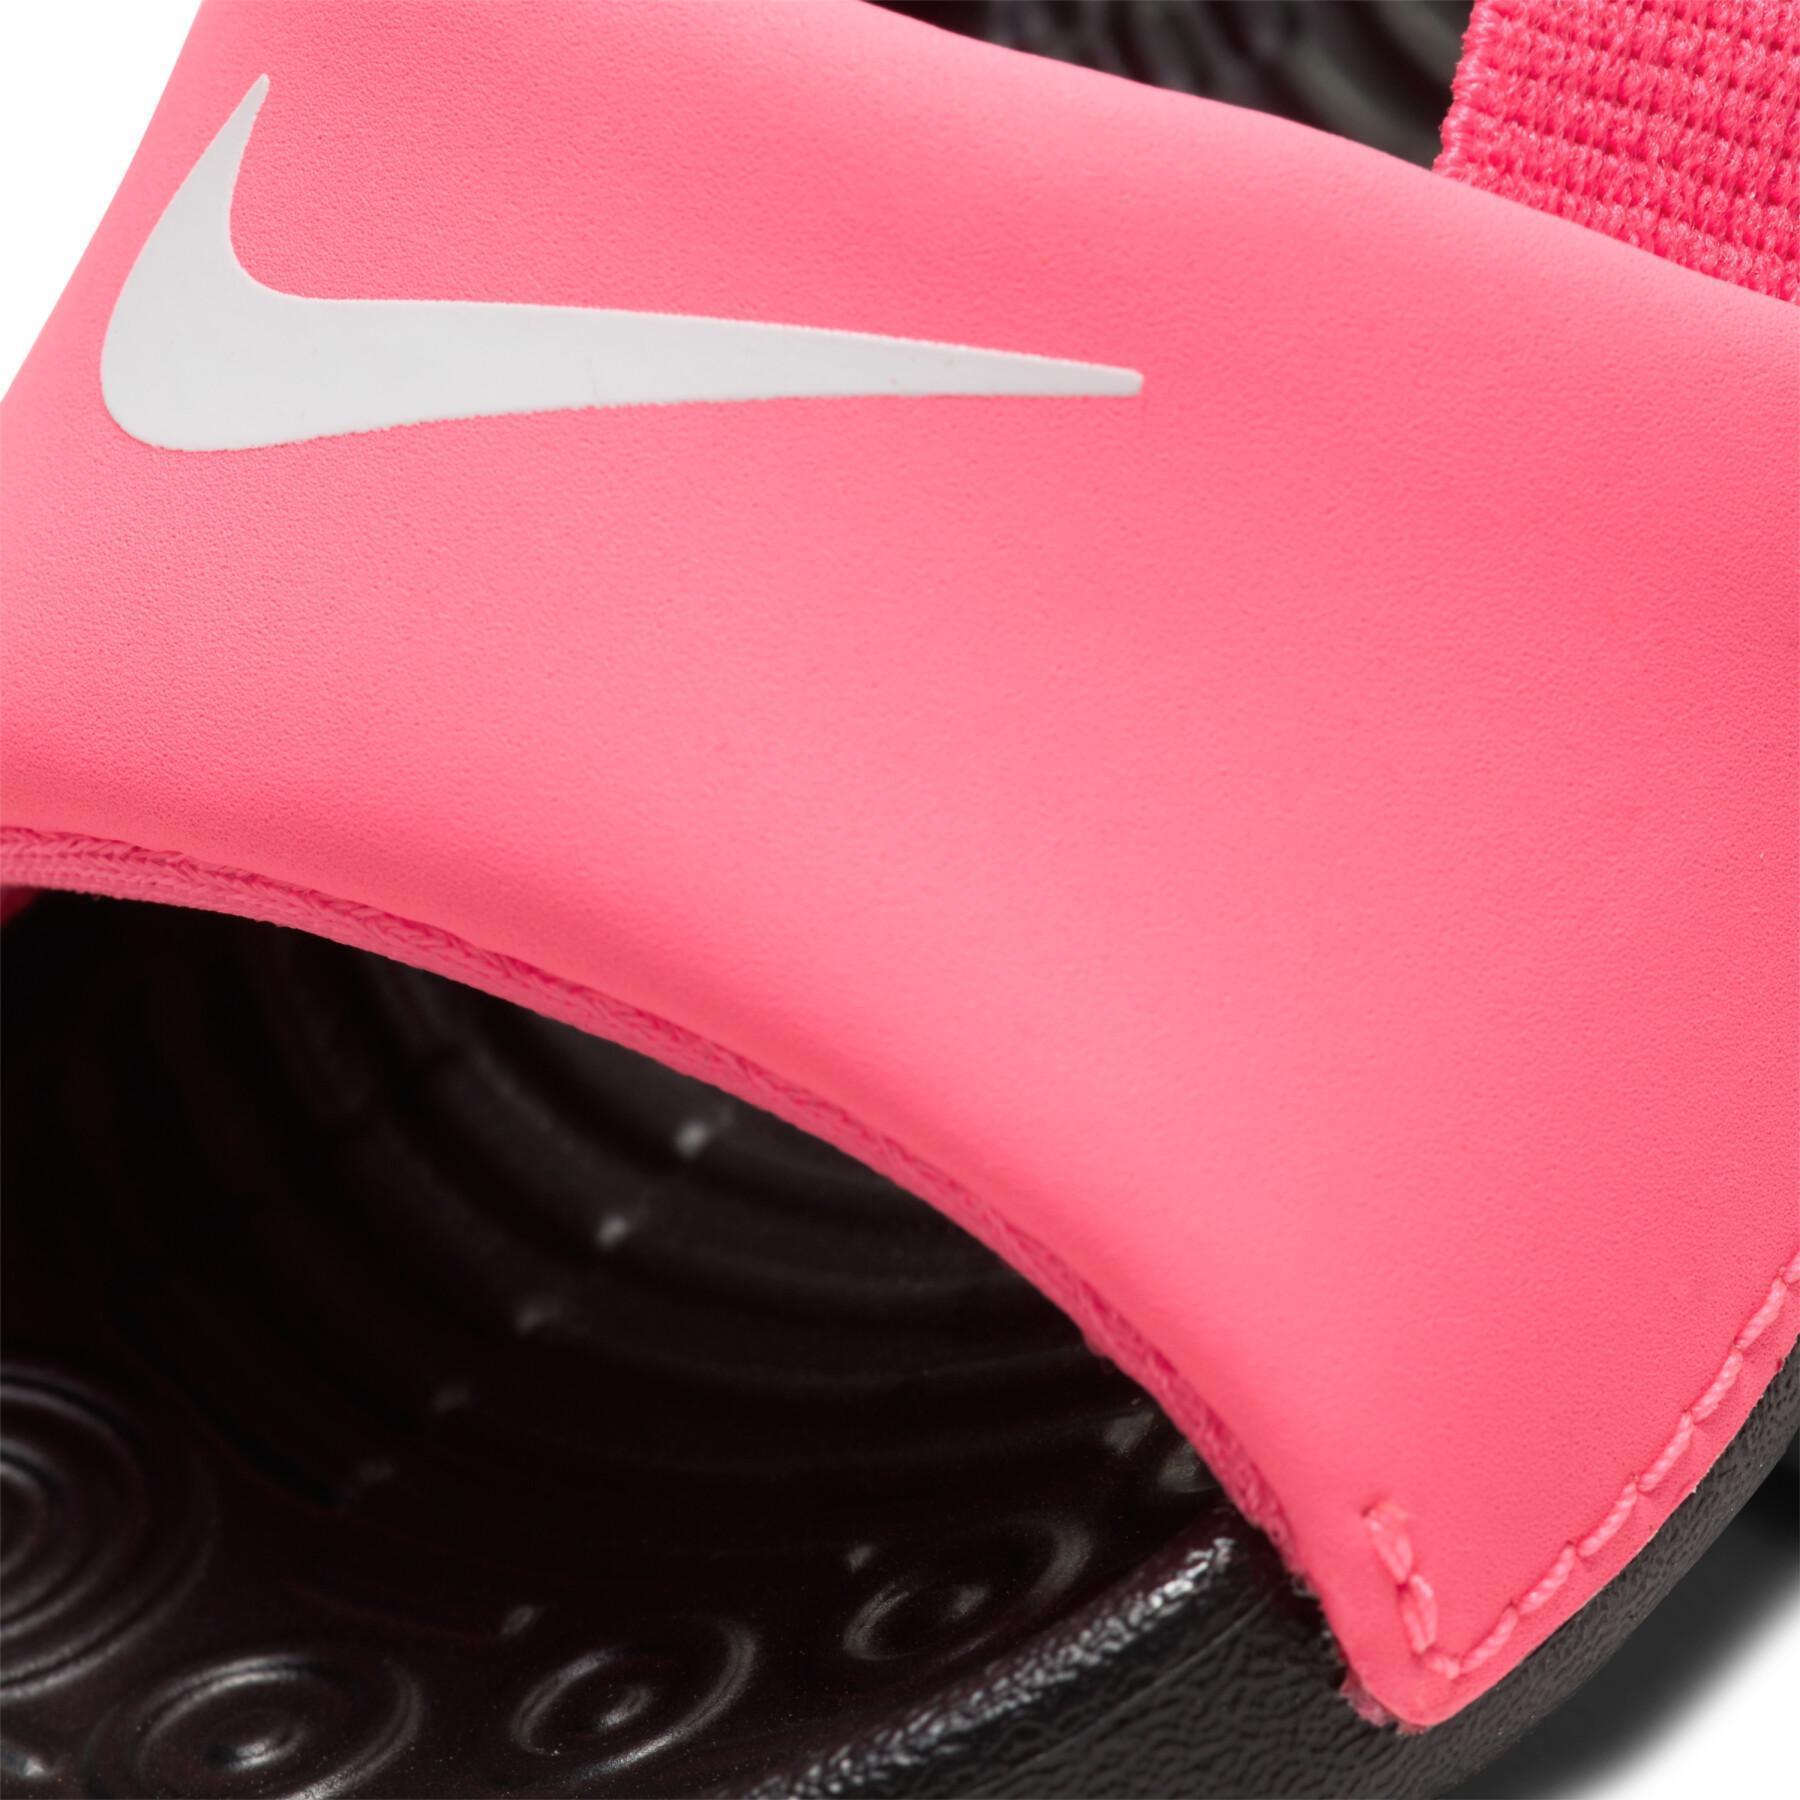 Flip-flops för baby Nike kawa